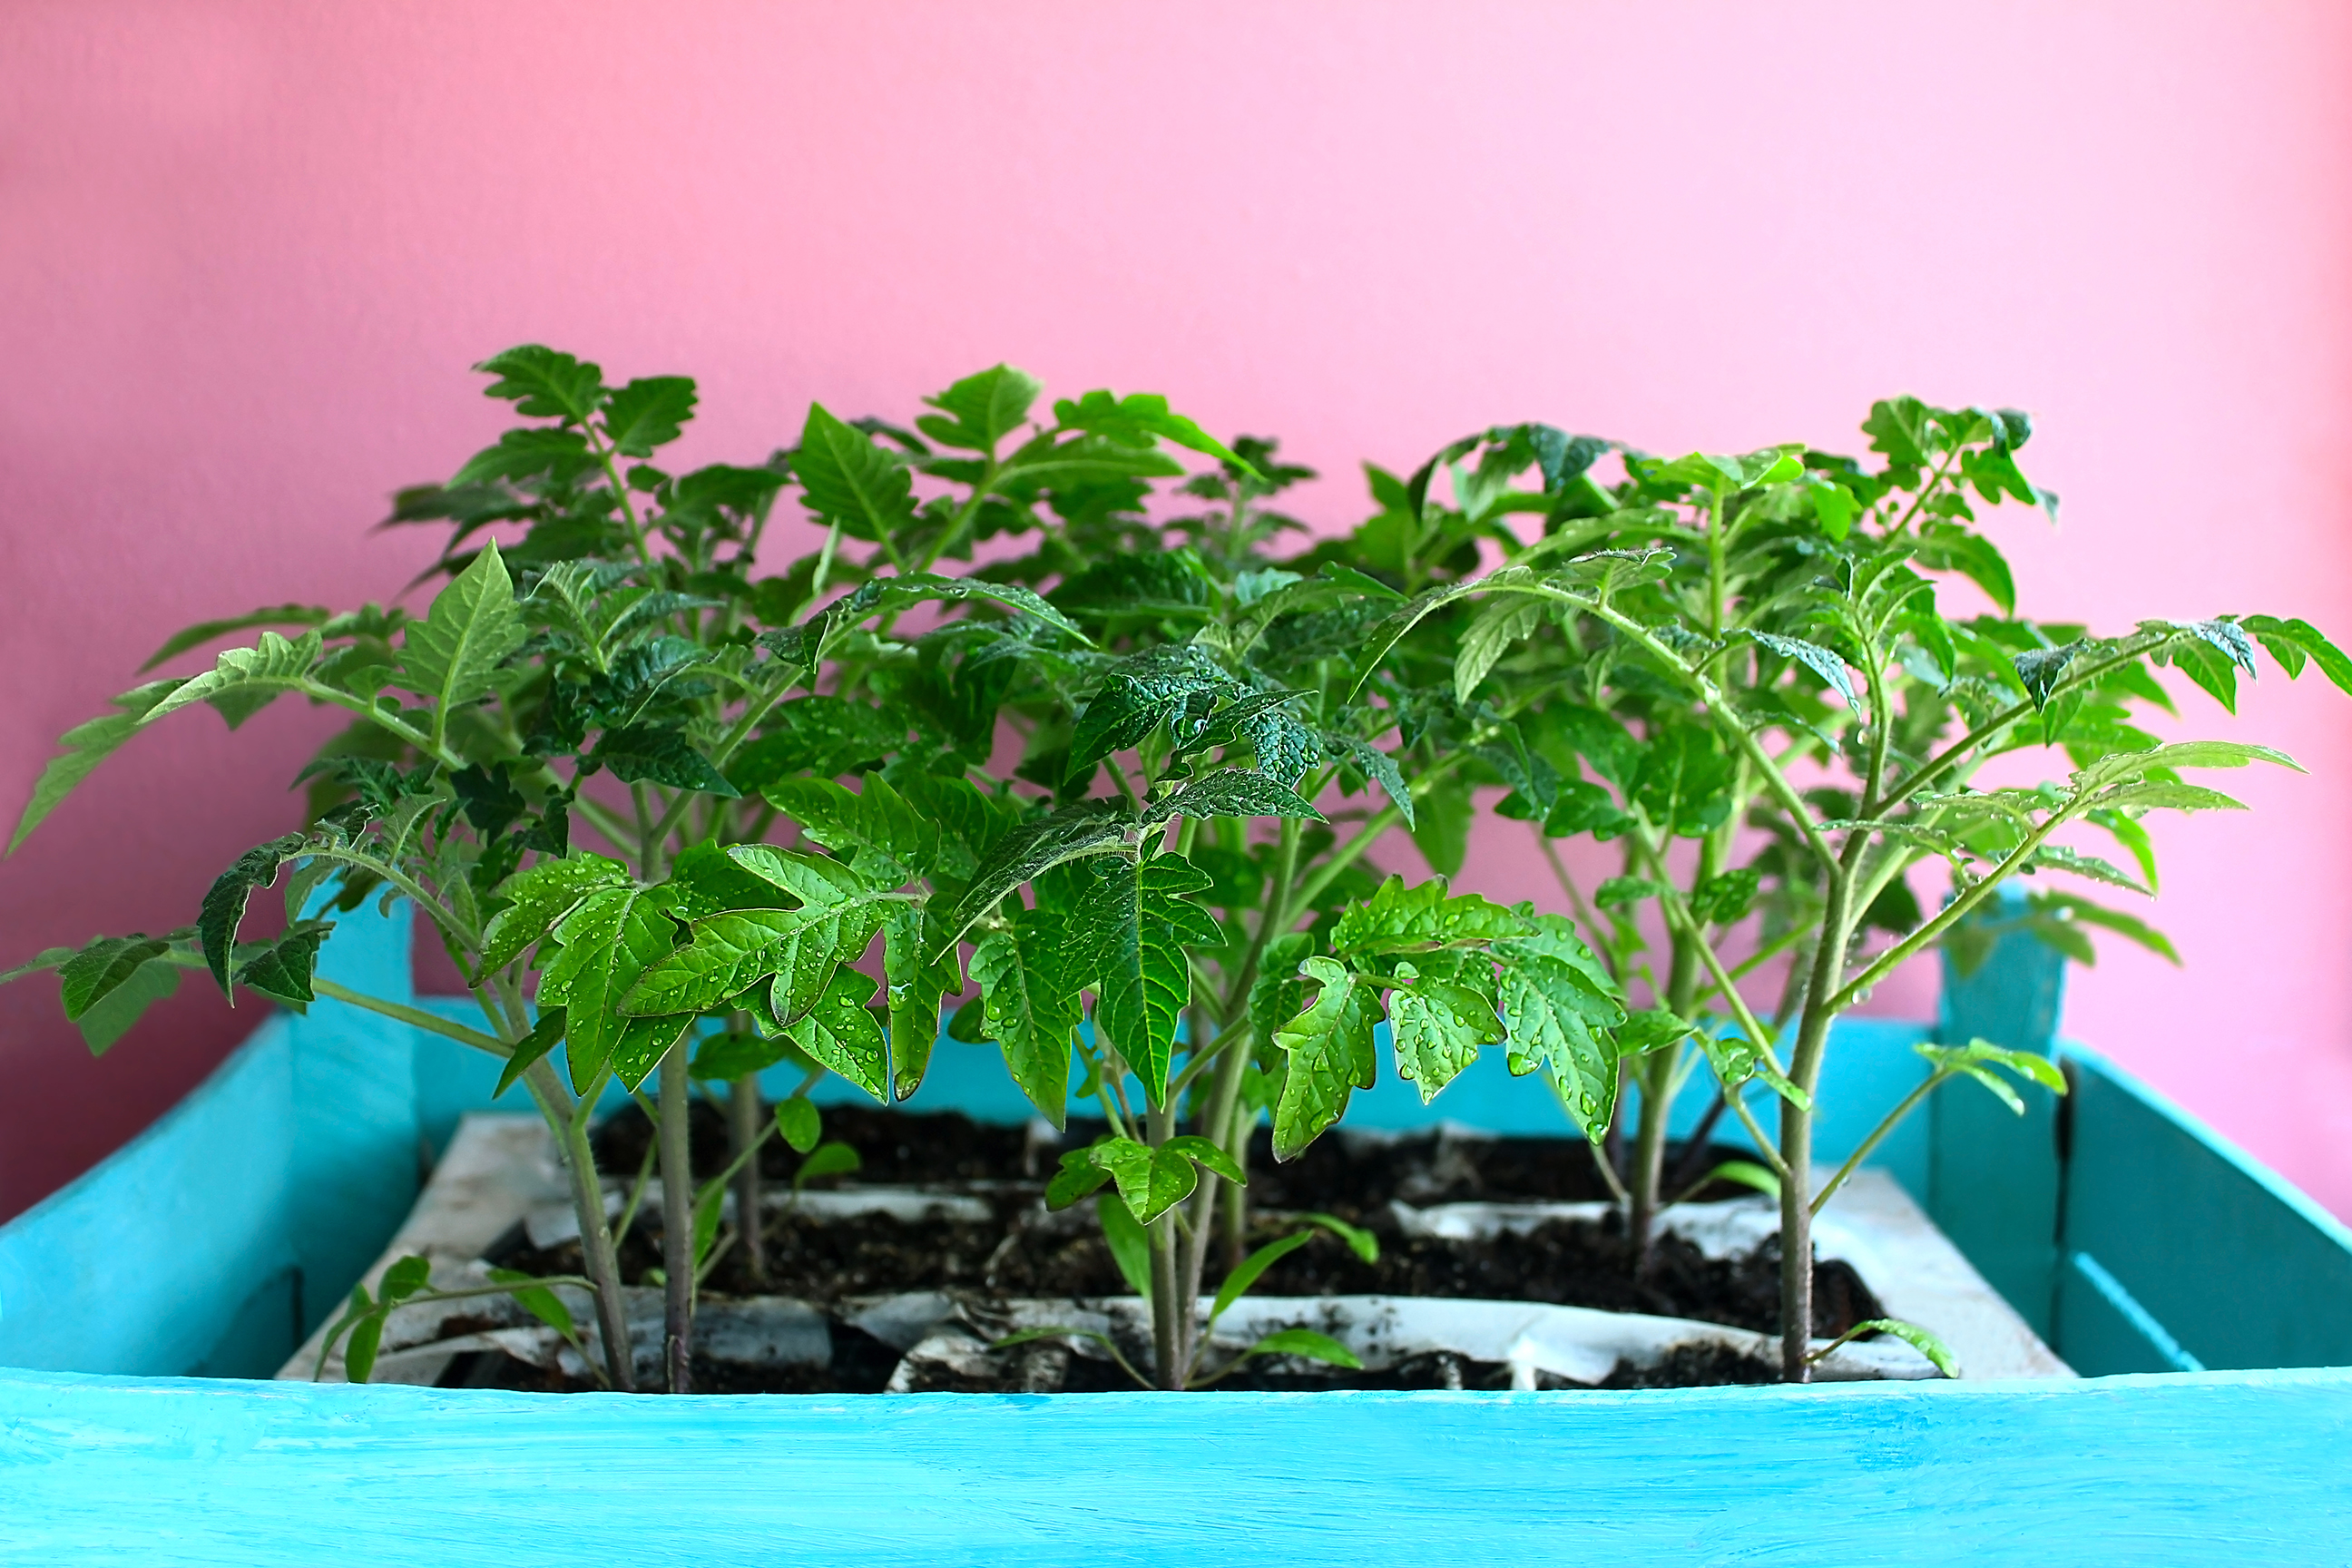 Tomato seedlings in homemade indoor planter